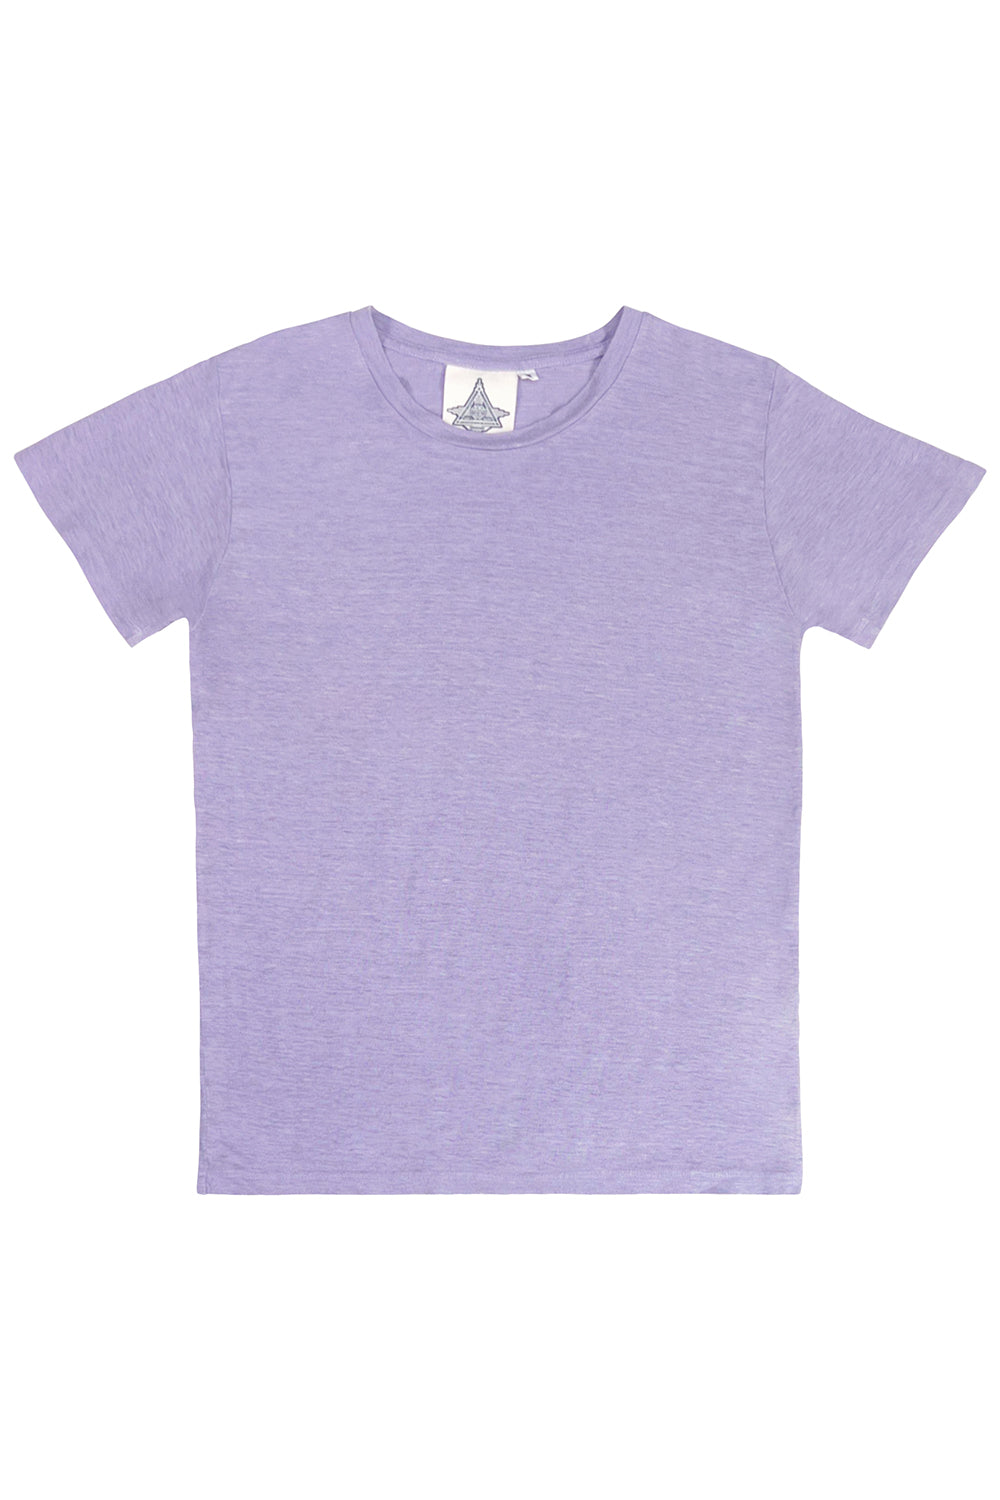 Madison 100% Hemp Tee | Jungmaven Hemp Clothing & Accessories / Color: Misty Lilac